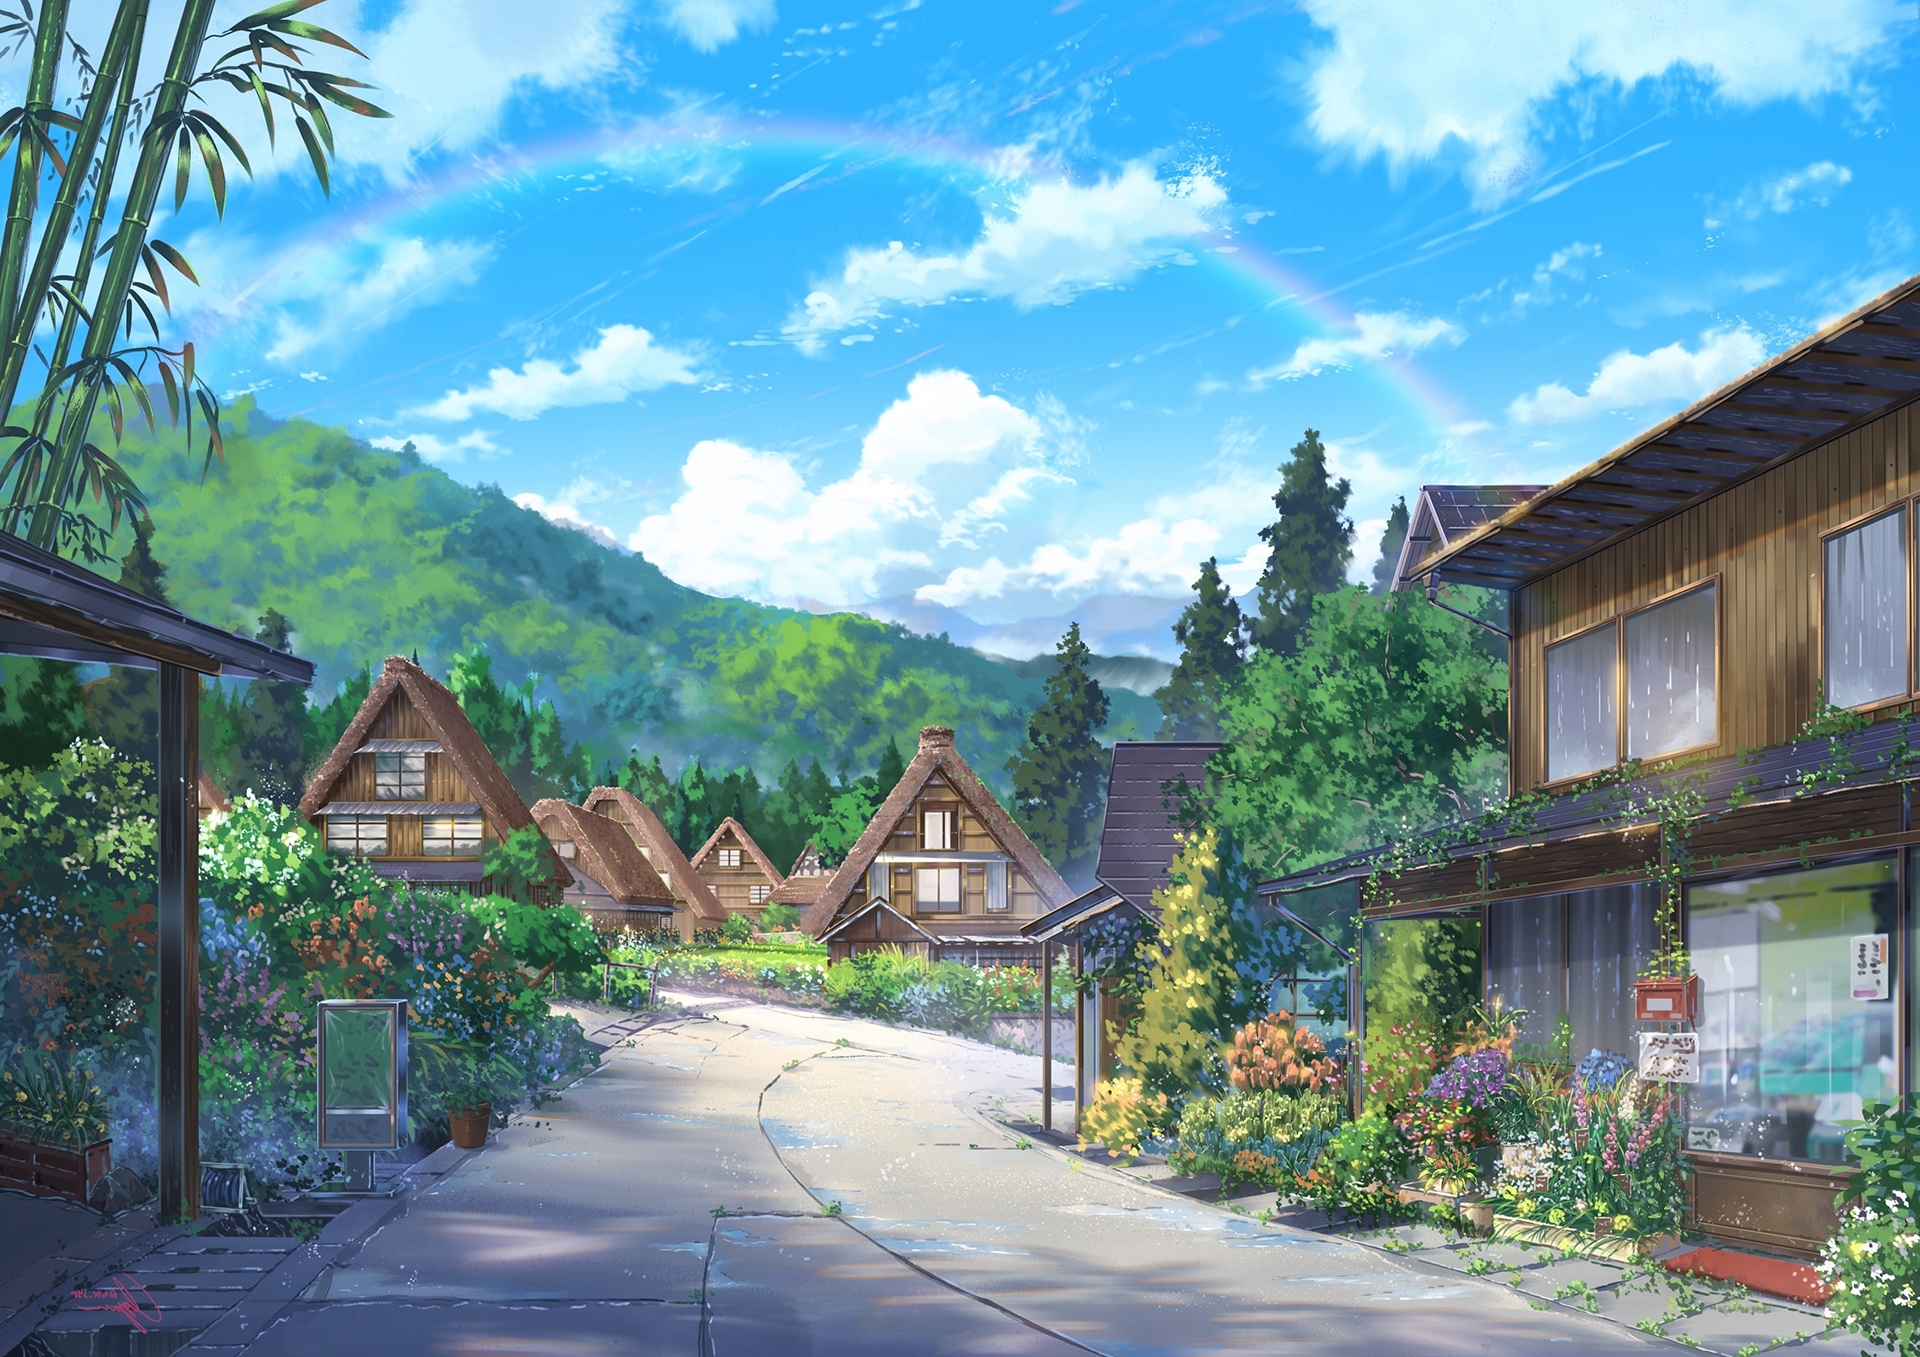 wallpaper anime landscape